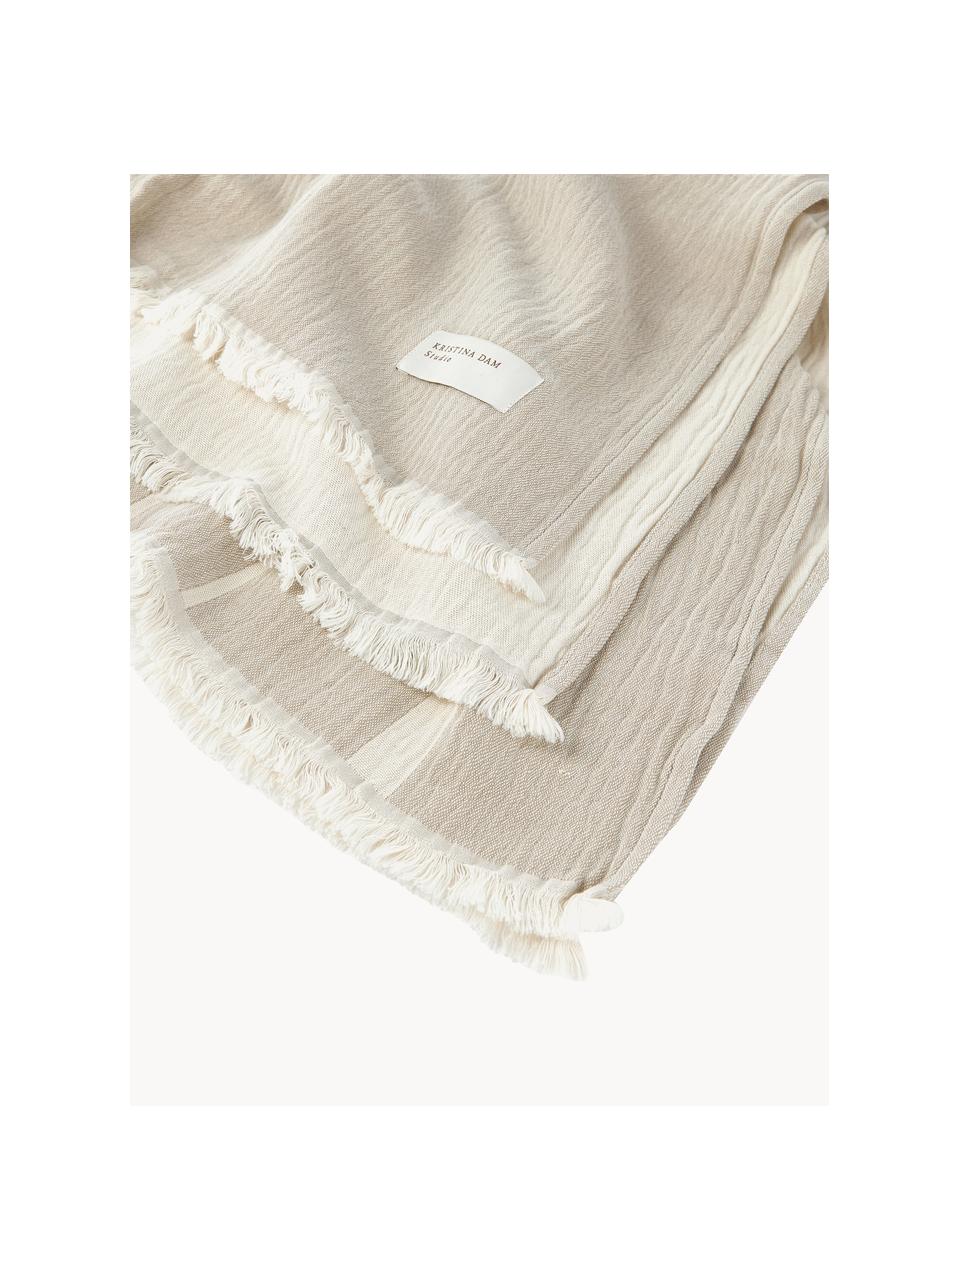 Colcha doble cara de algodón Architecture, 100% algodón, Beige claro, blanco crema, An 130 x Al 180 cm